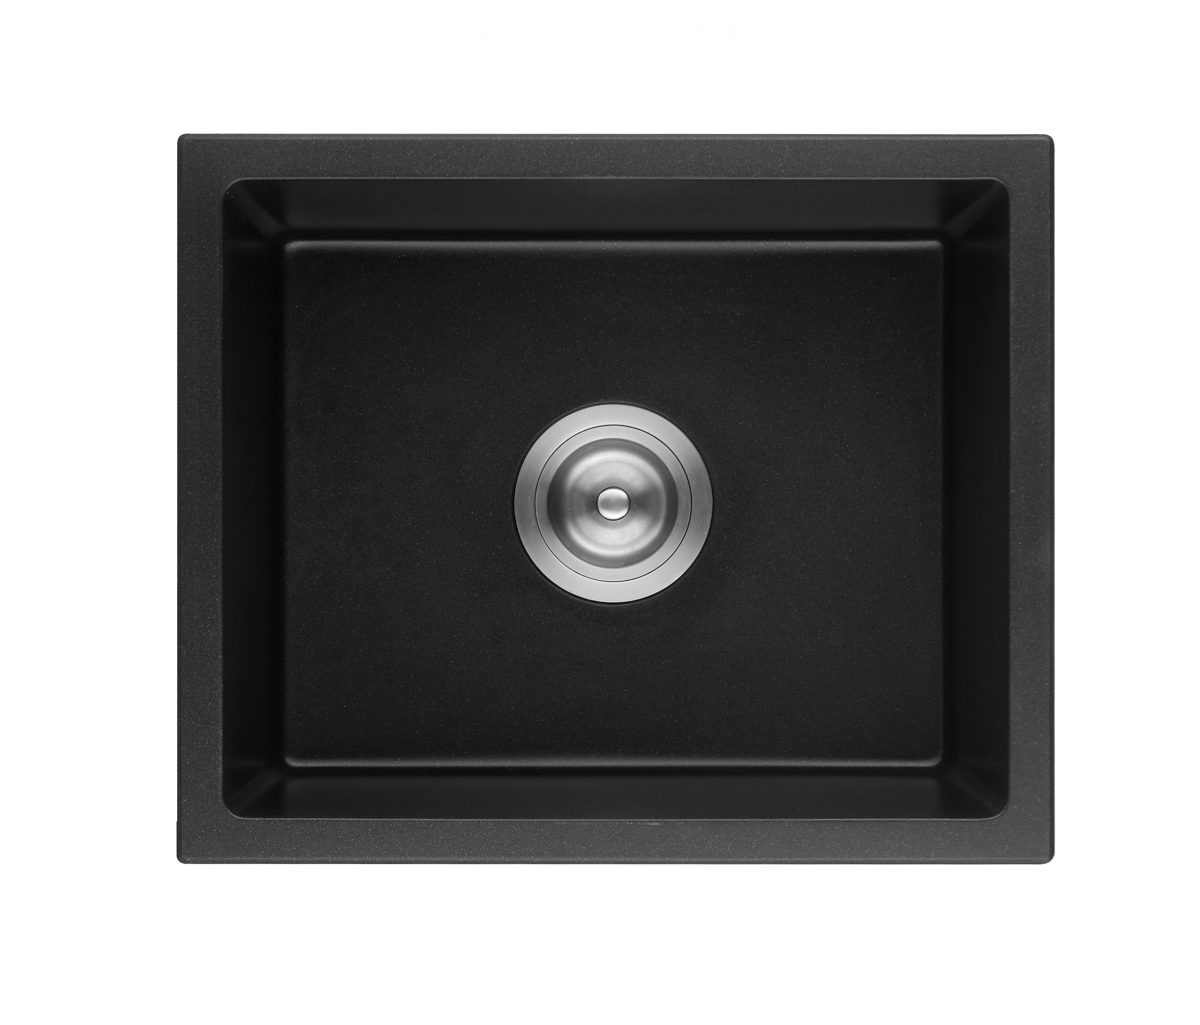 poseidon-qks4343-mb-quartz-undermount-kitchen-sink-432432246mm-single-bowl-matte-black